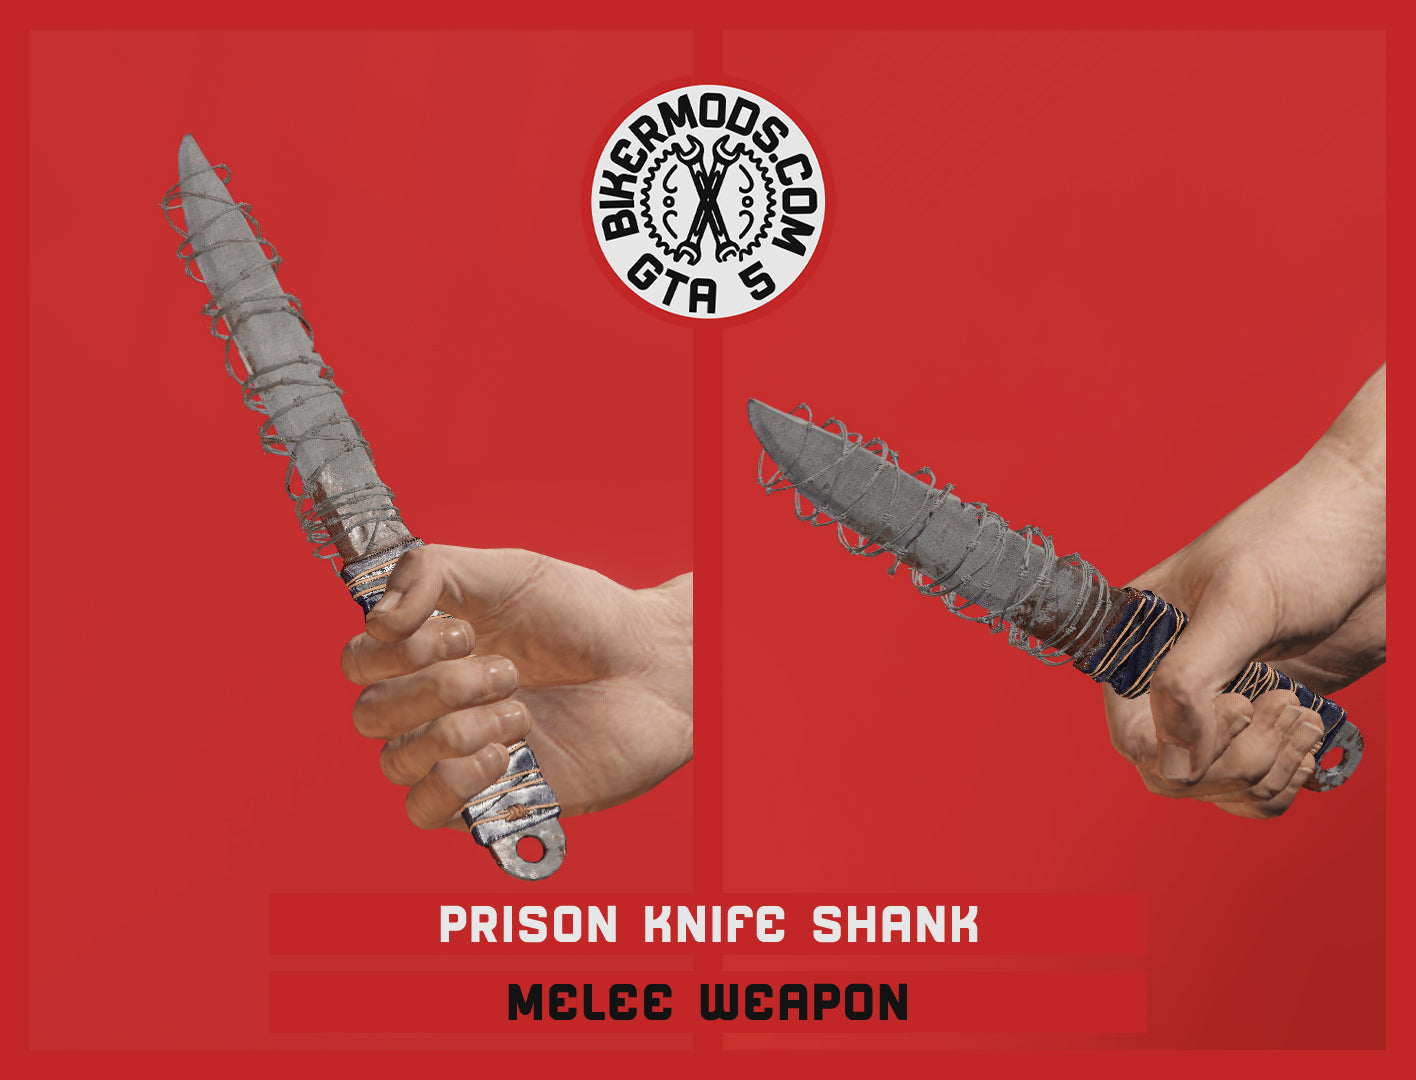 Prison Knife Shank (Melee Weapon)